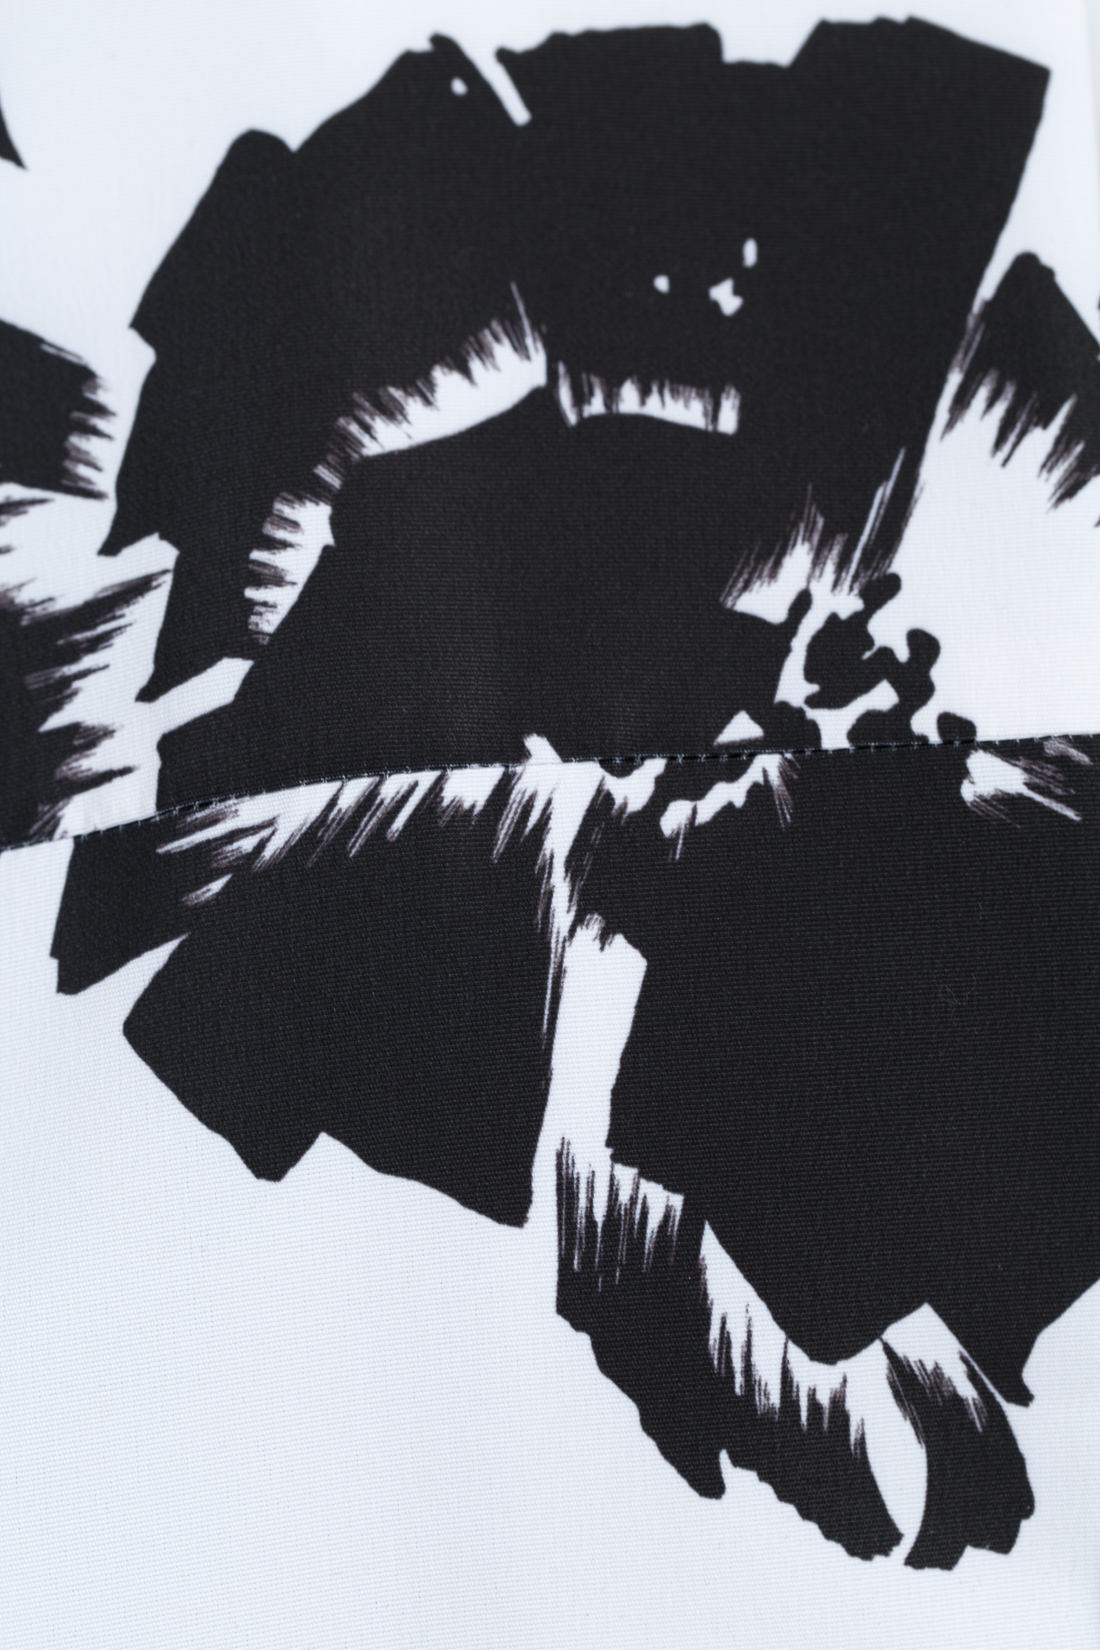 Ветровка с рукавами-оборками (арт. baon B107015), размер XL, цвет white printed#белый Ветровка с рукавами-оборками (арт. baon B107015) - фото 3